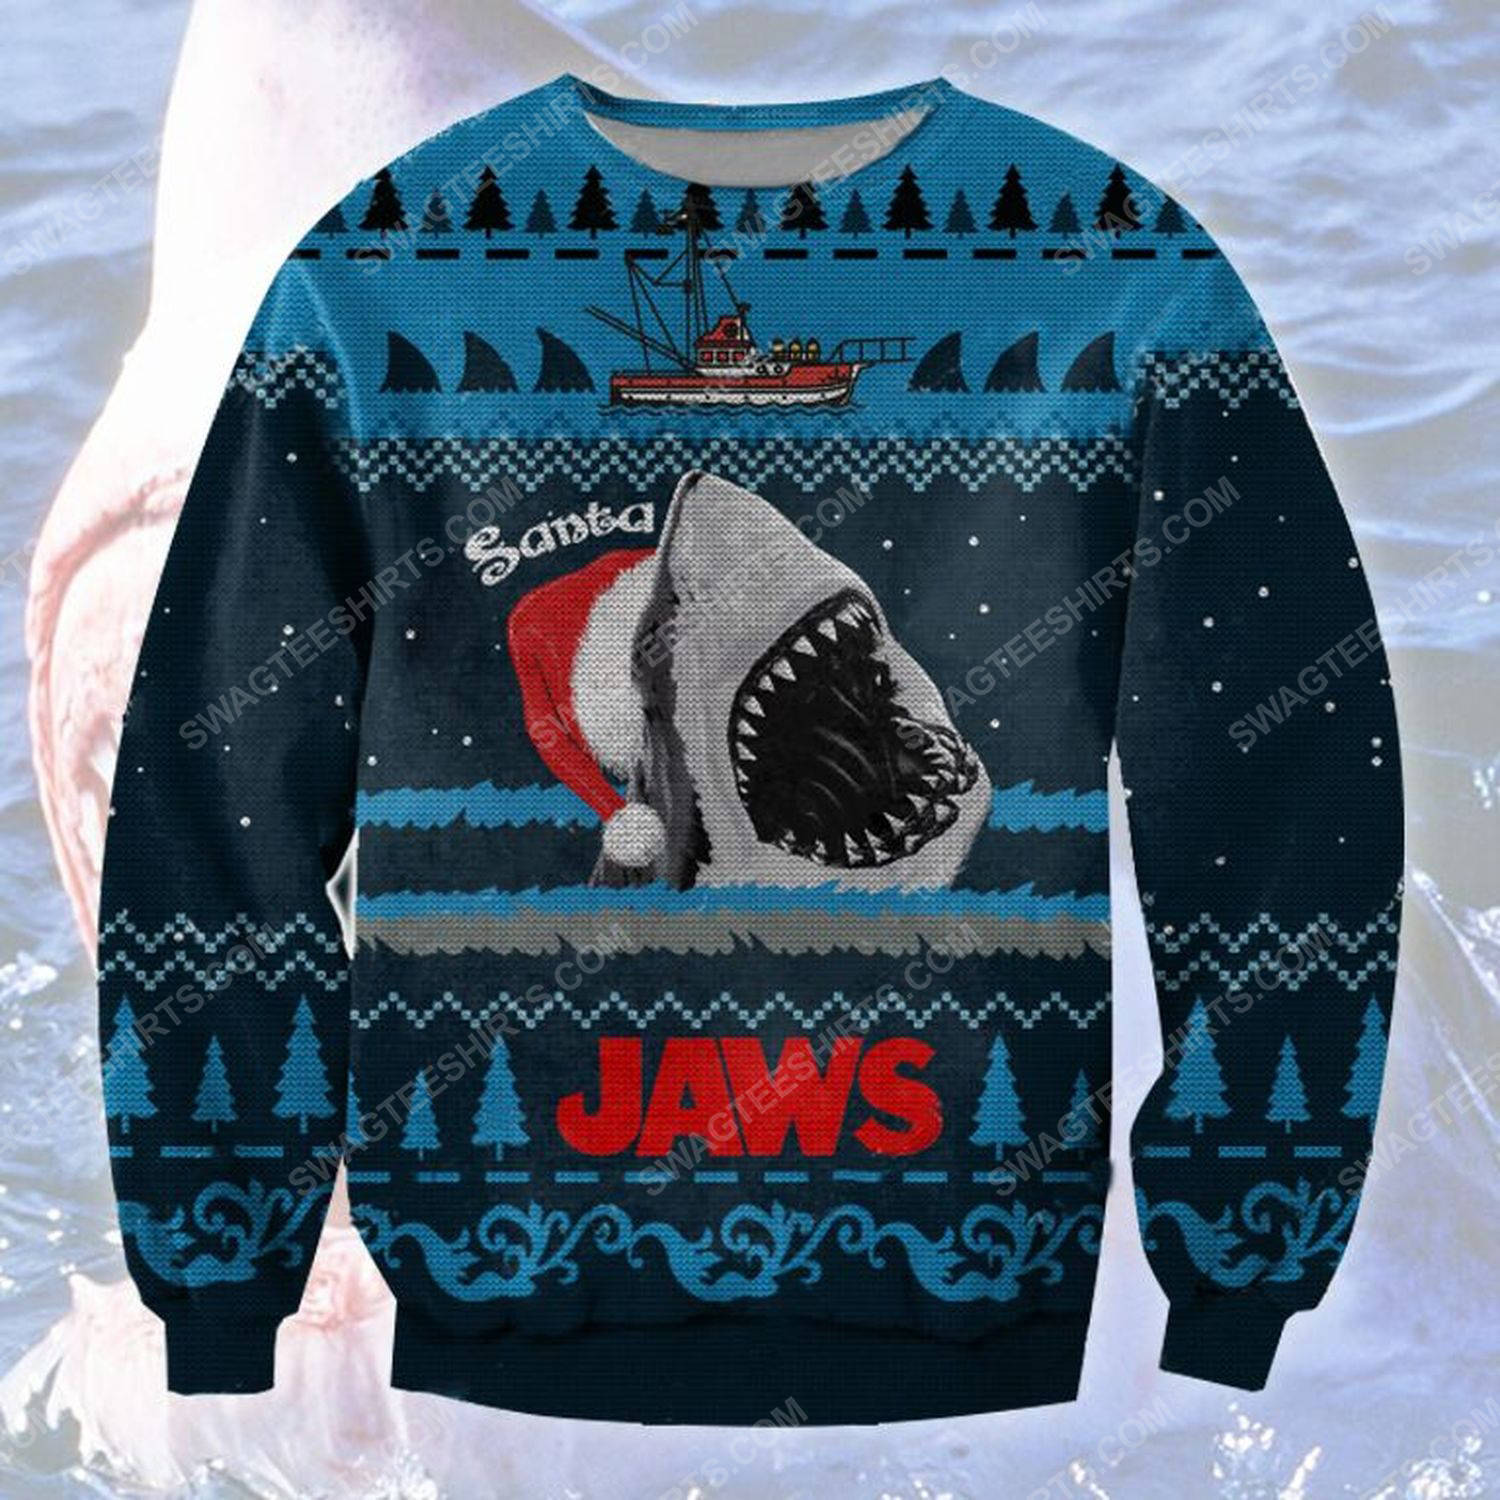 Santa jaws ugly christmas sweater